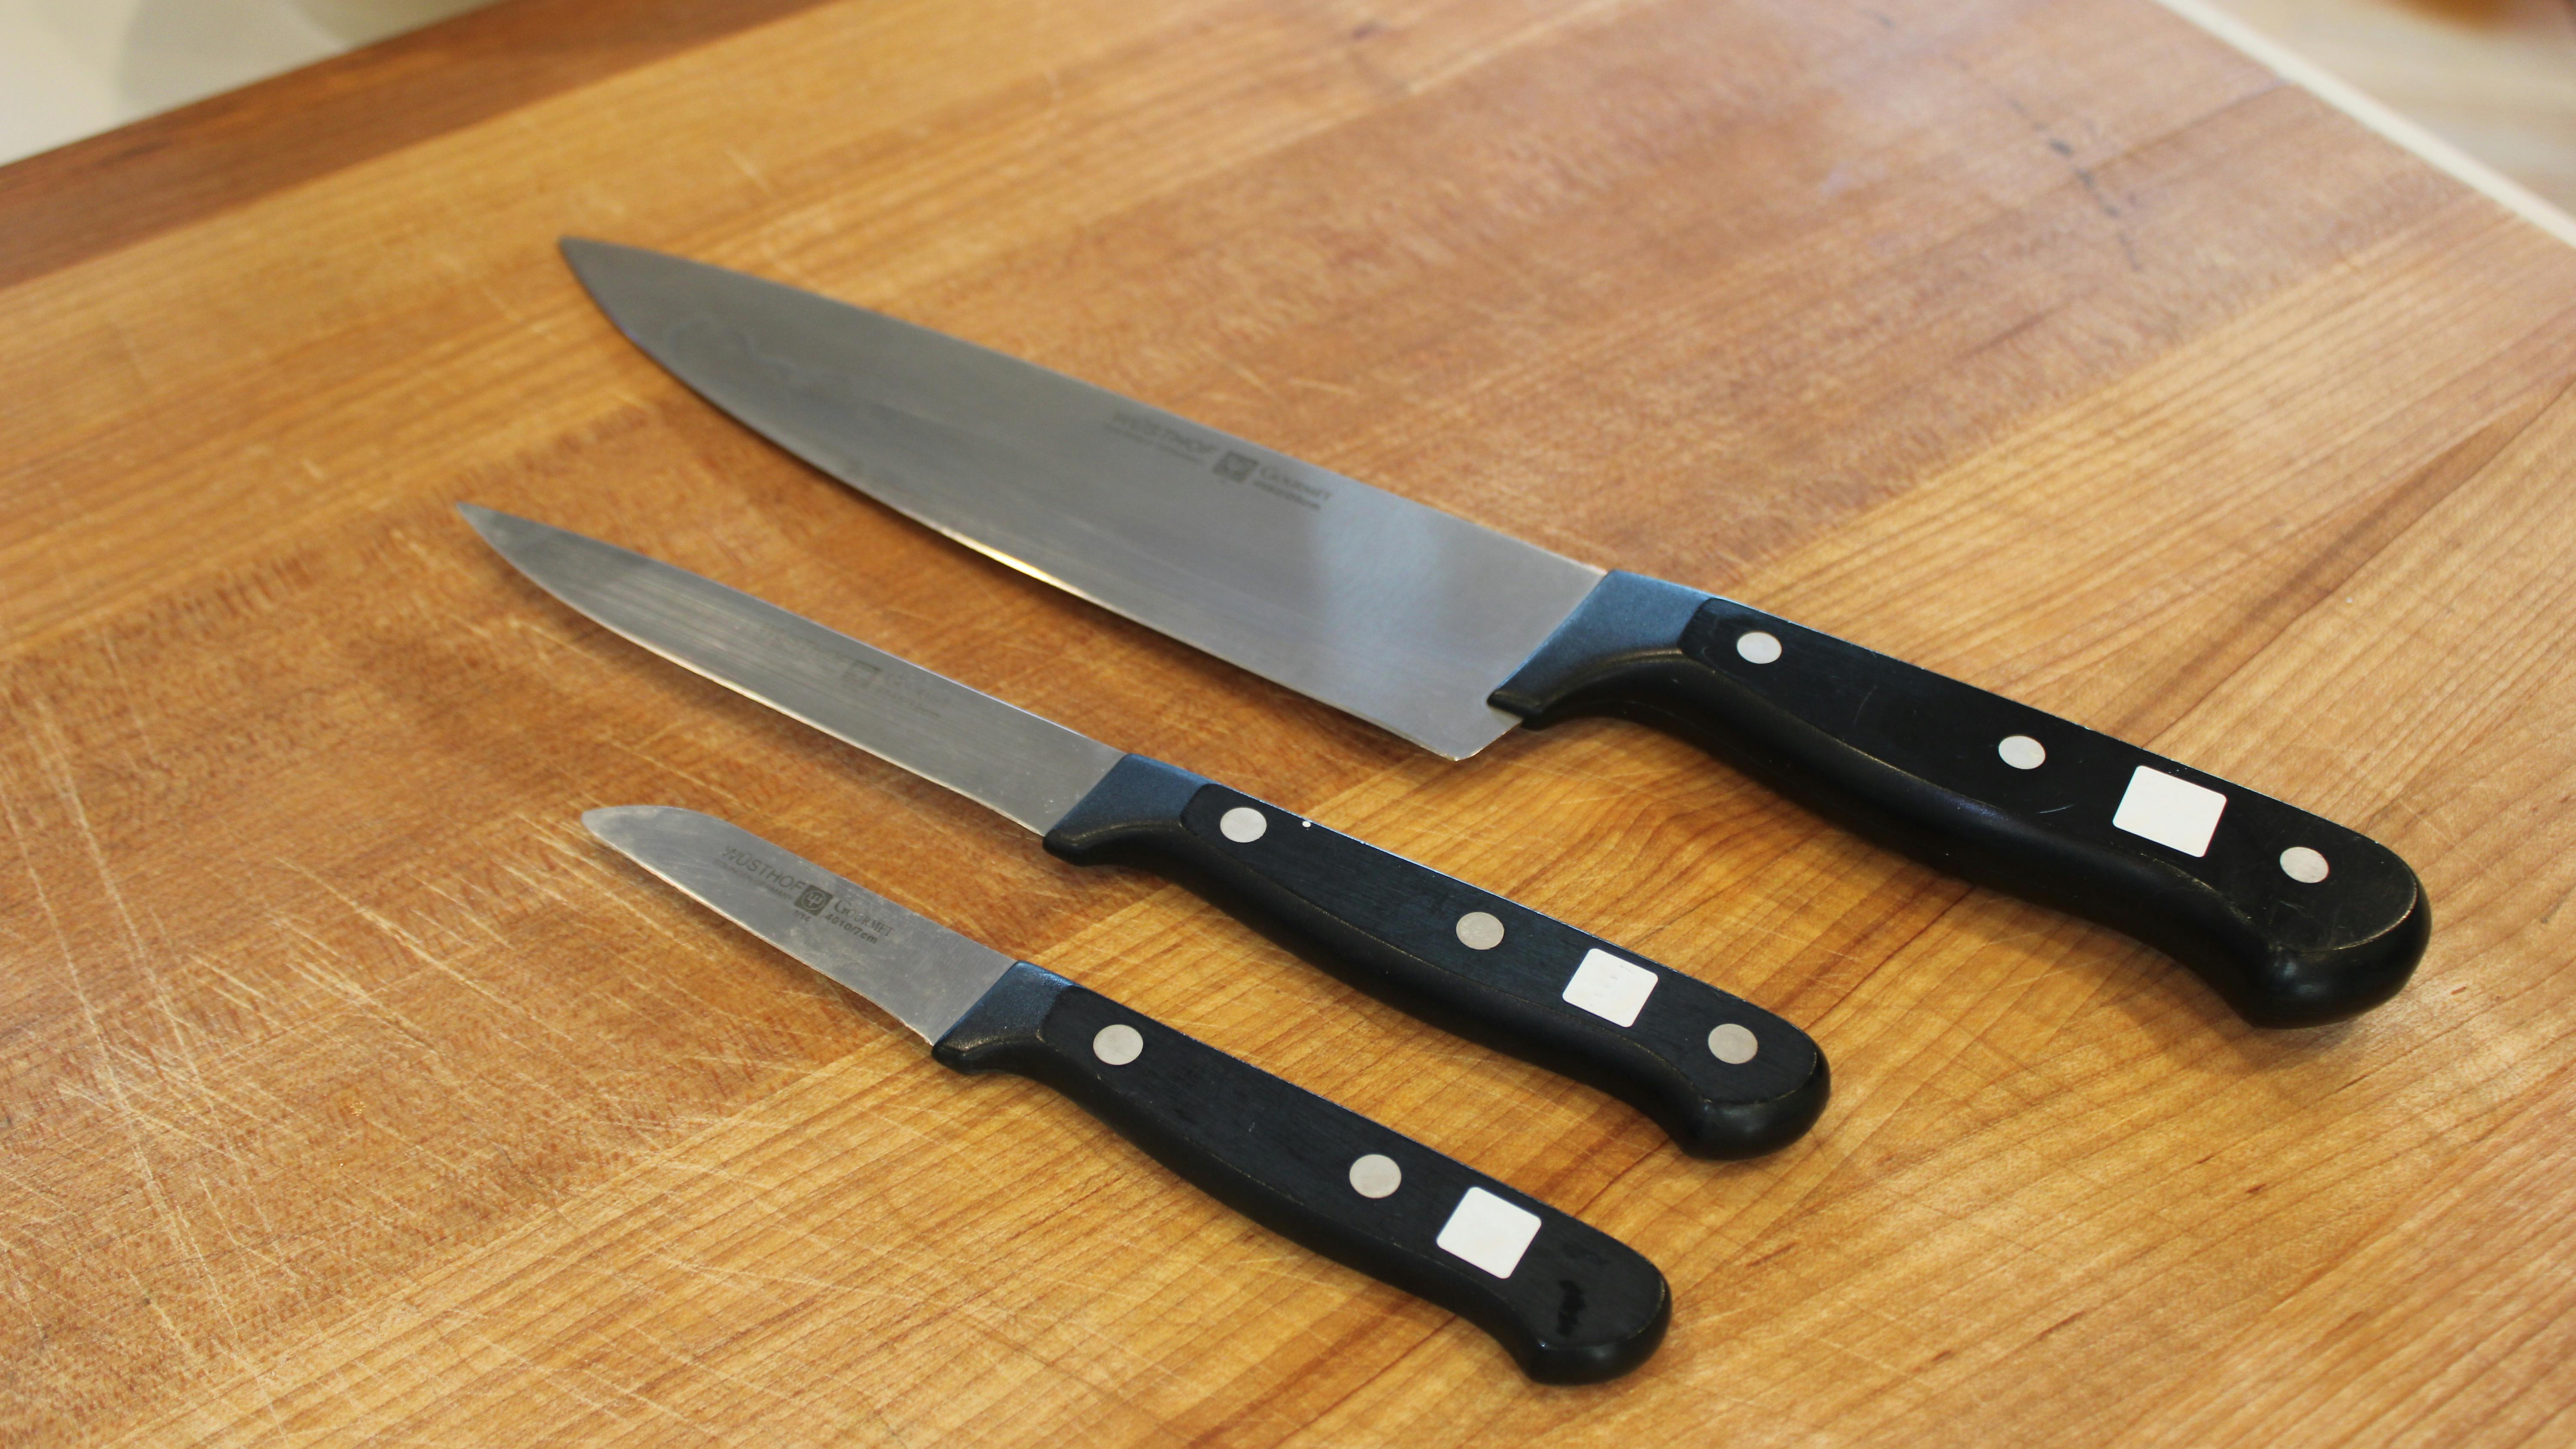 Three chef's knives set on wood block.